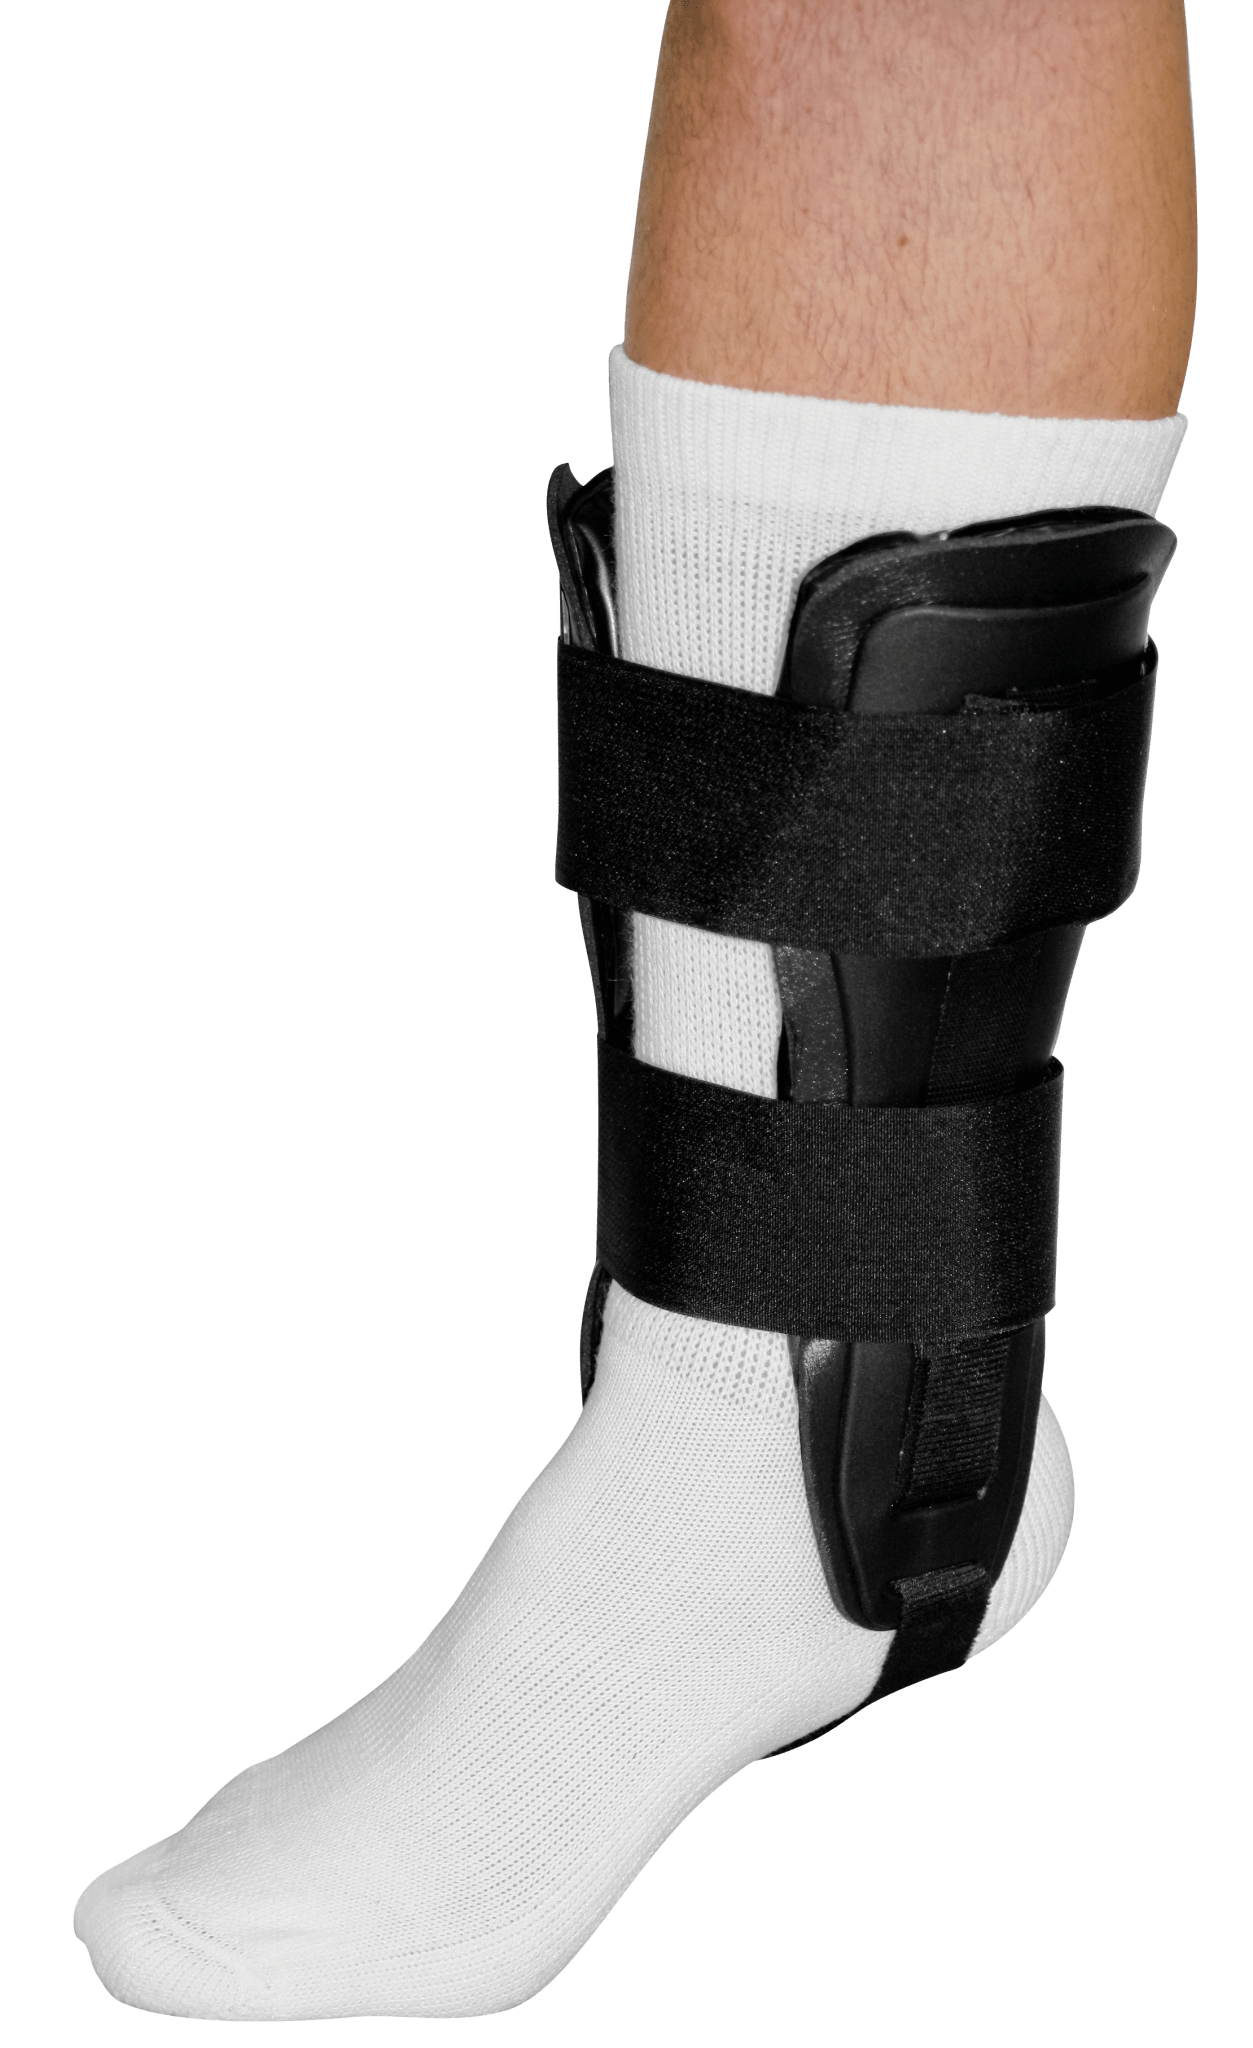 EA/1 - Leader Gel Air Ankle Support, Black, Universal - Best Buy Medical Supplies